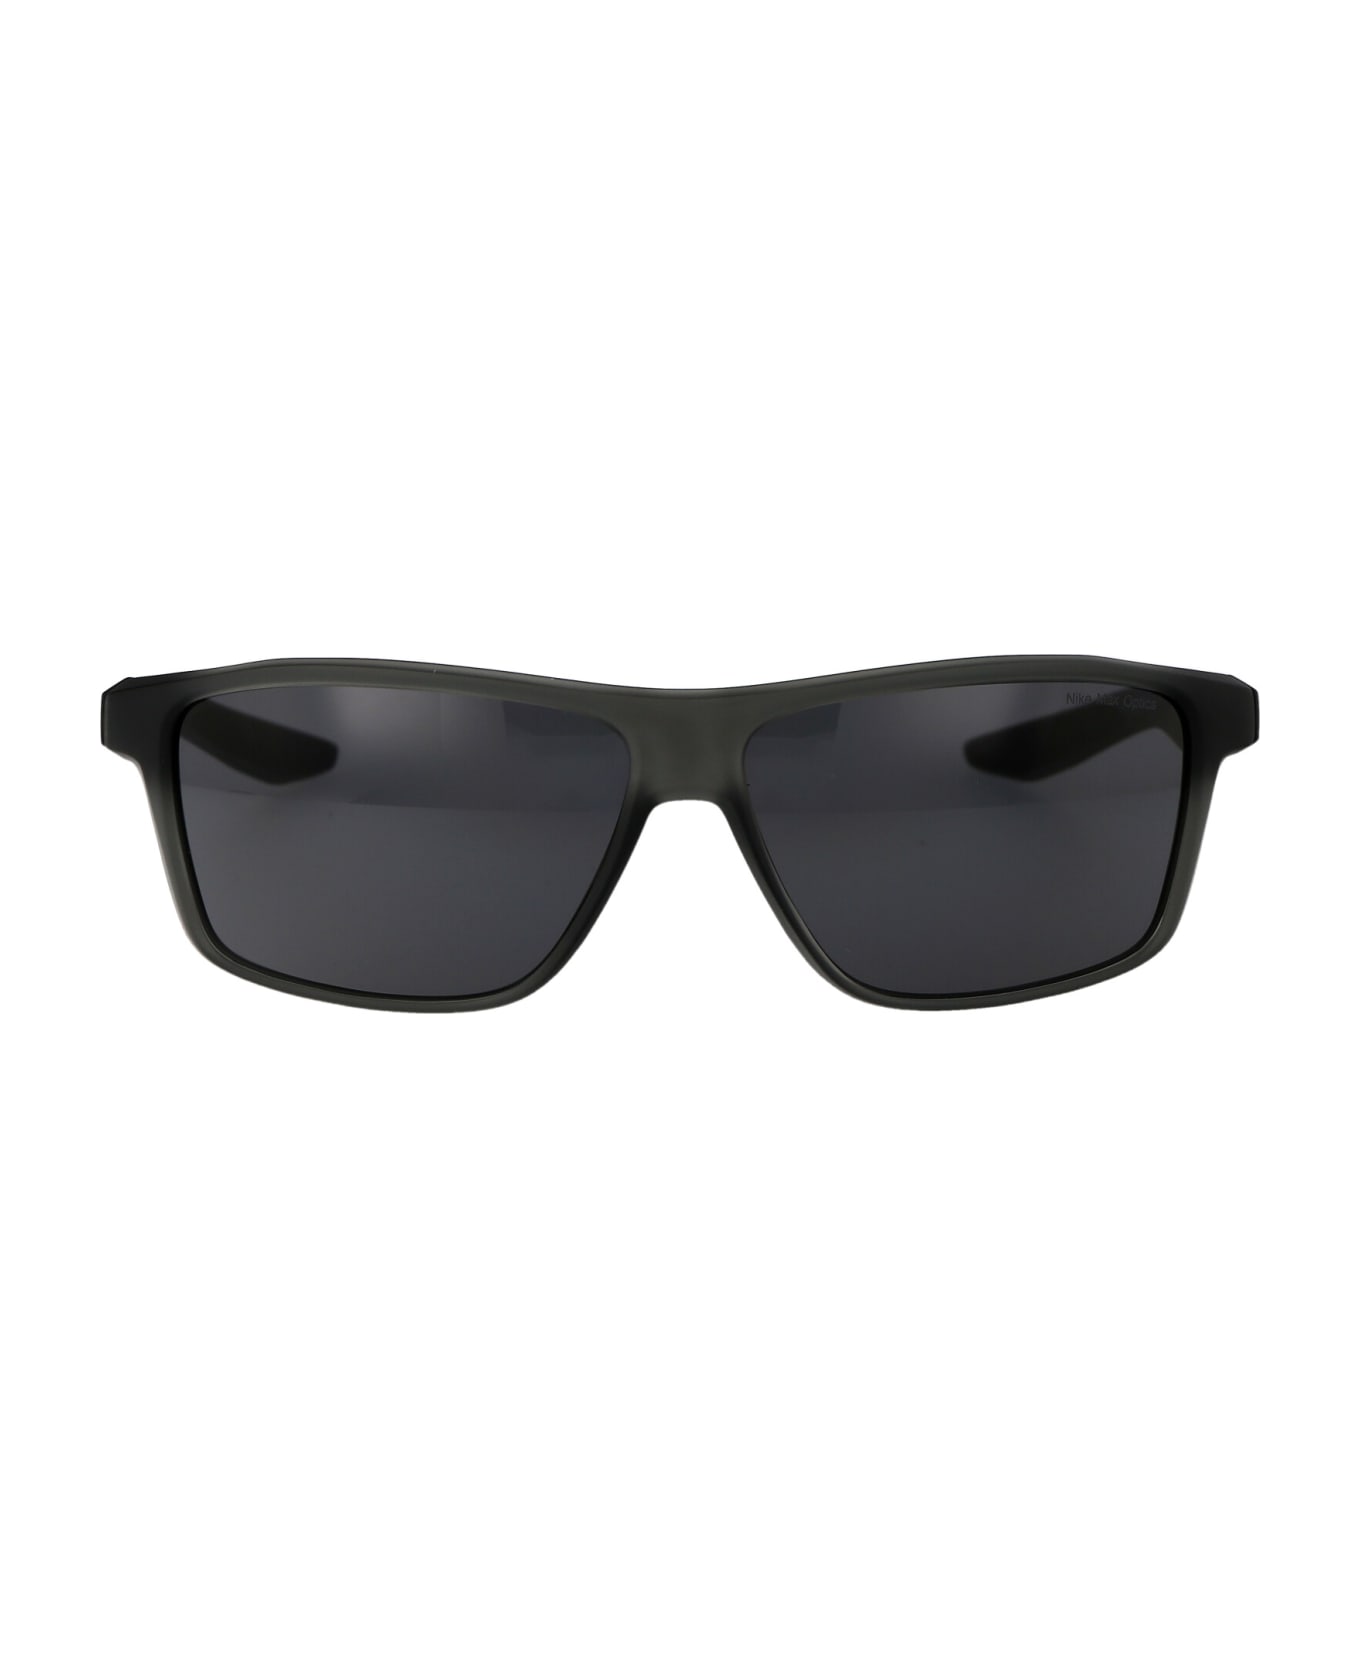 Nike Premier Sunglasses - 060 DARK GREY ANTHRACITE